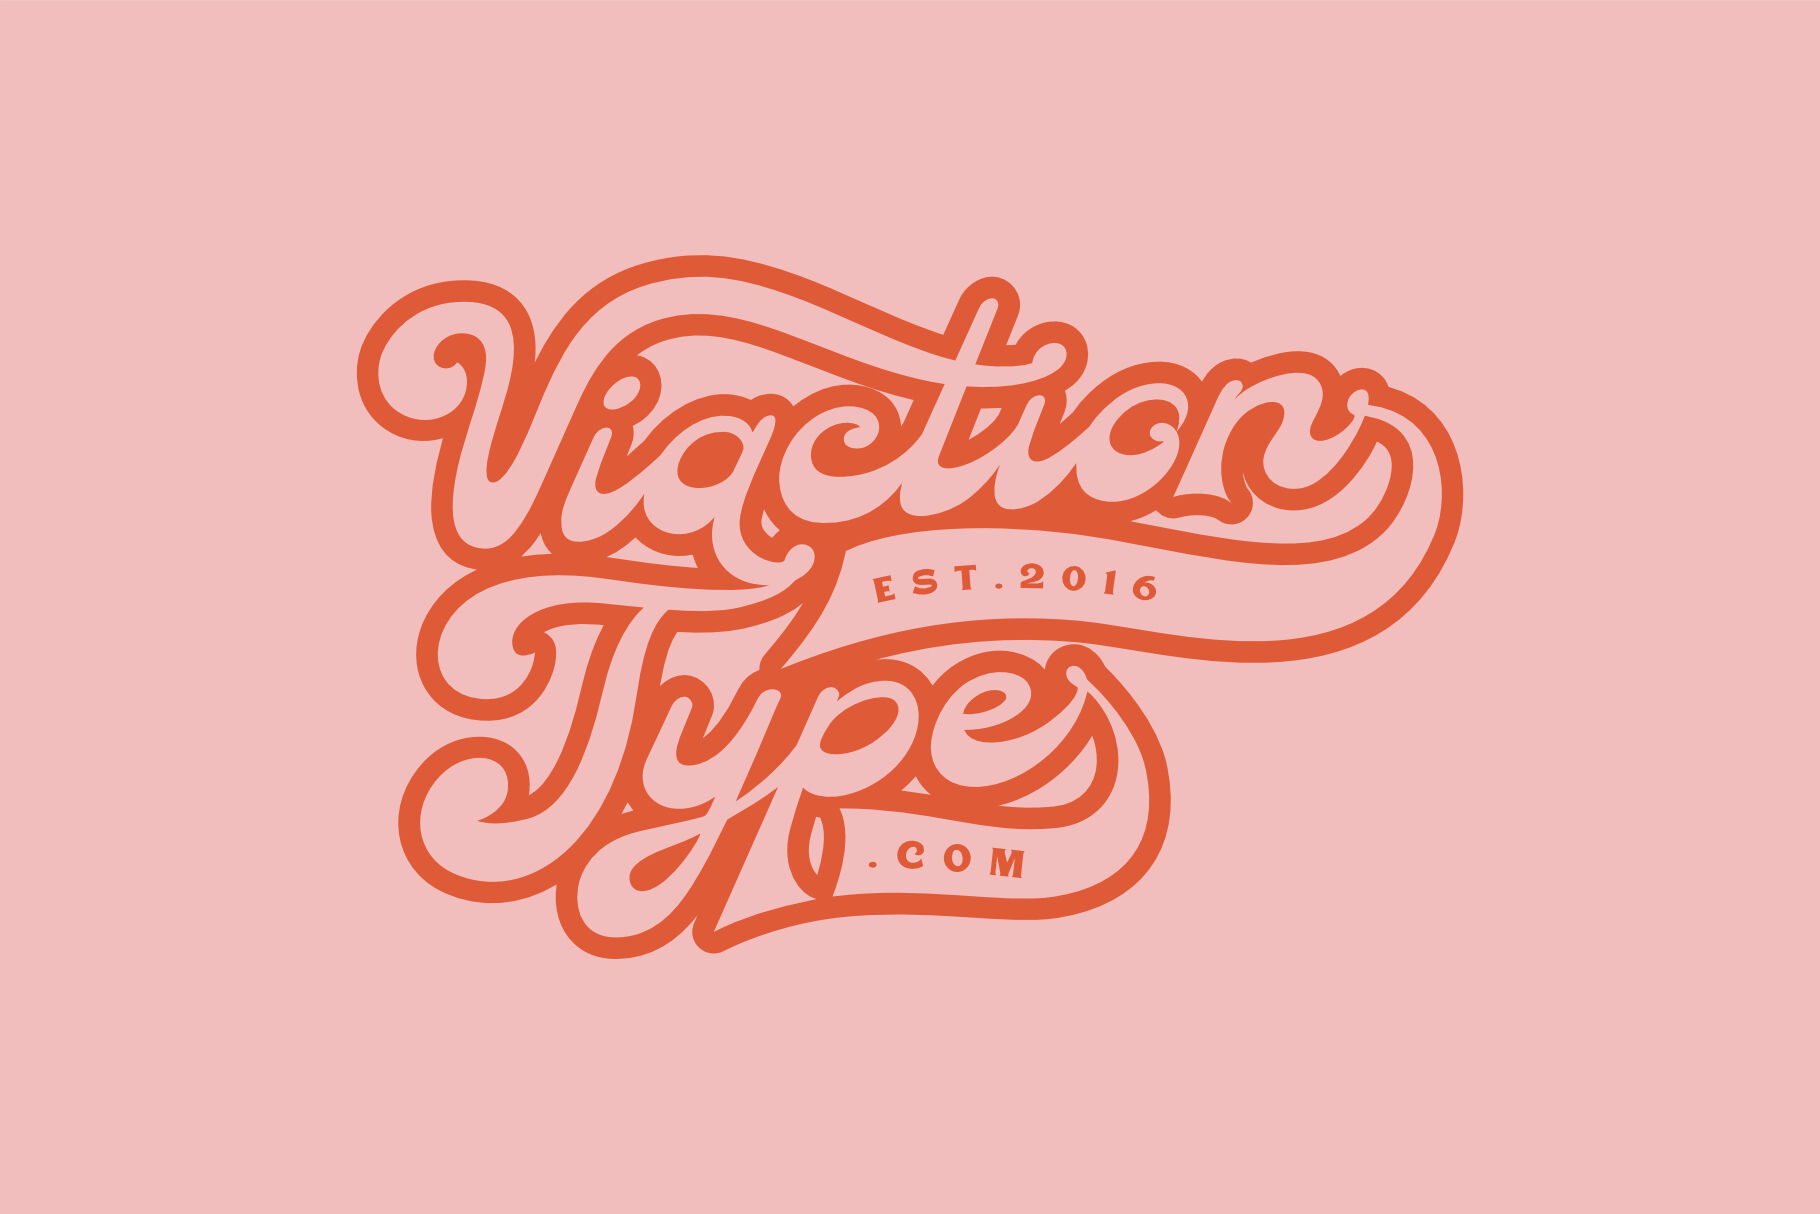 Viaction Type Co